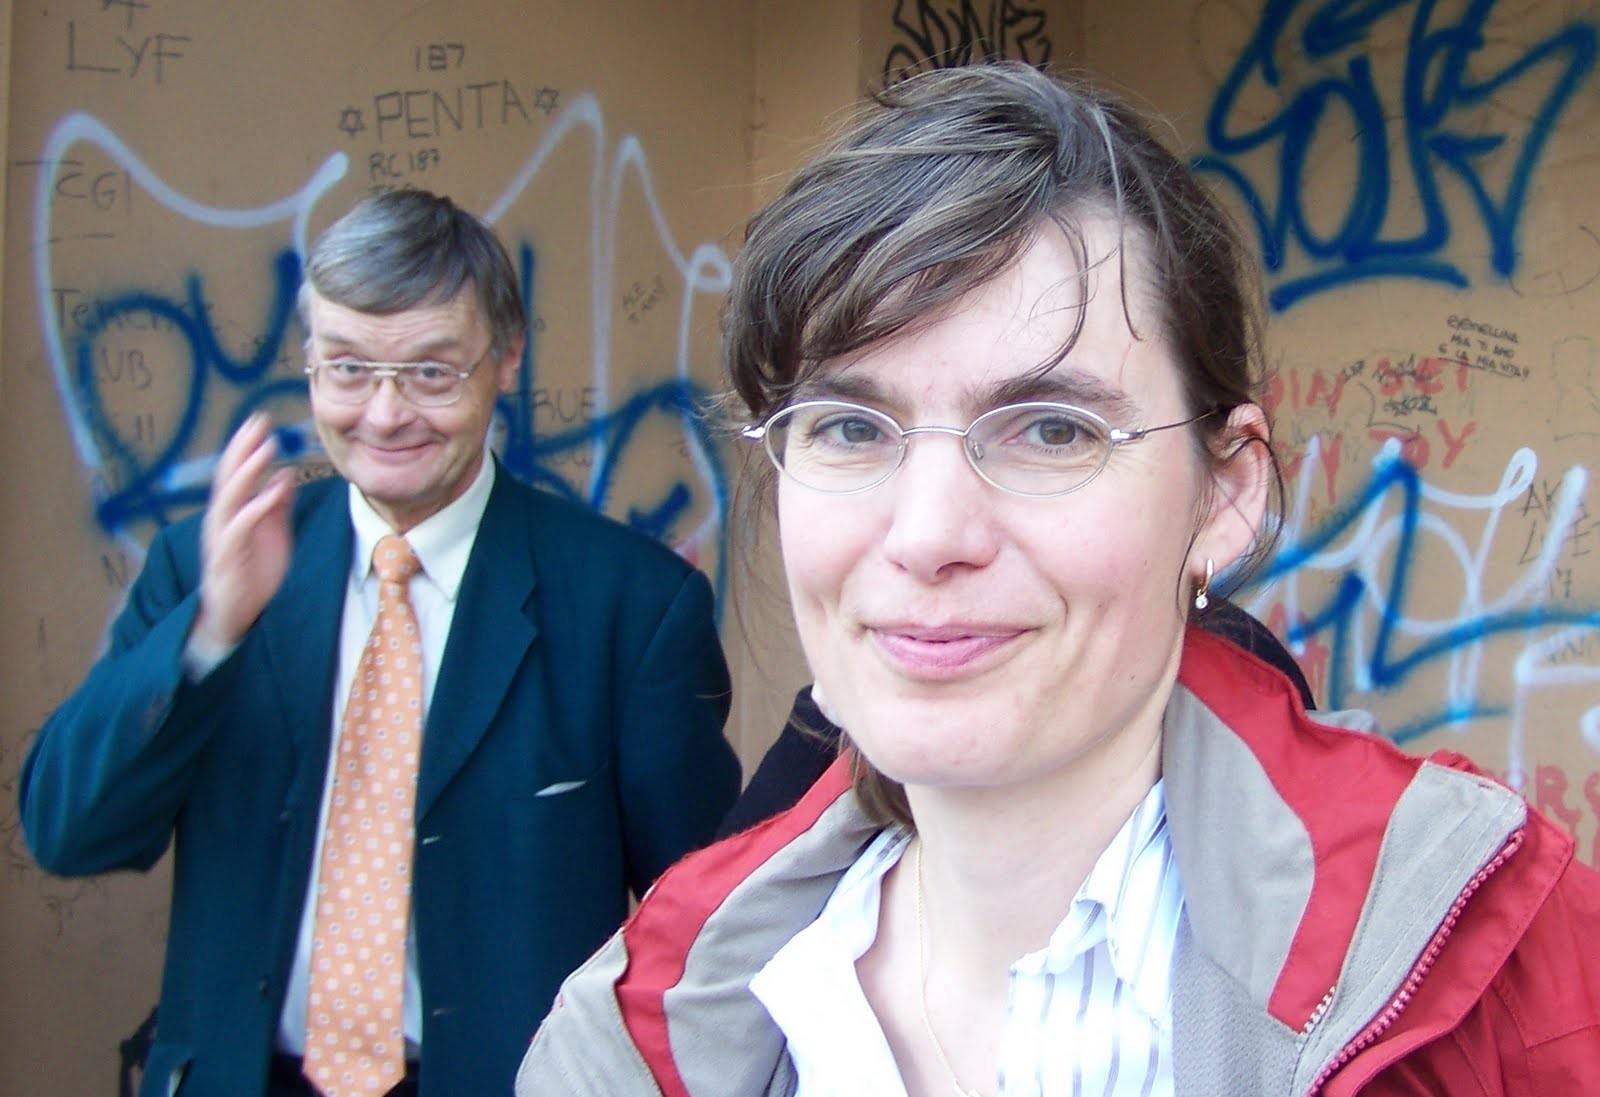 Heinz Huerzeler and Sigrun Peters 2010